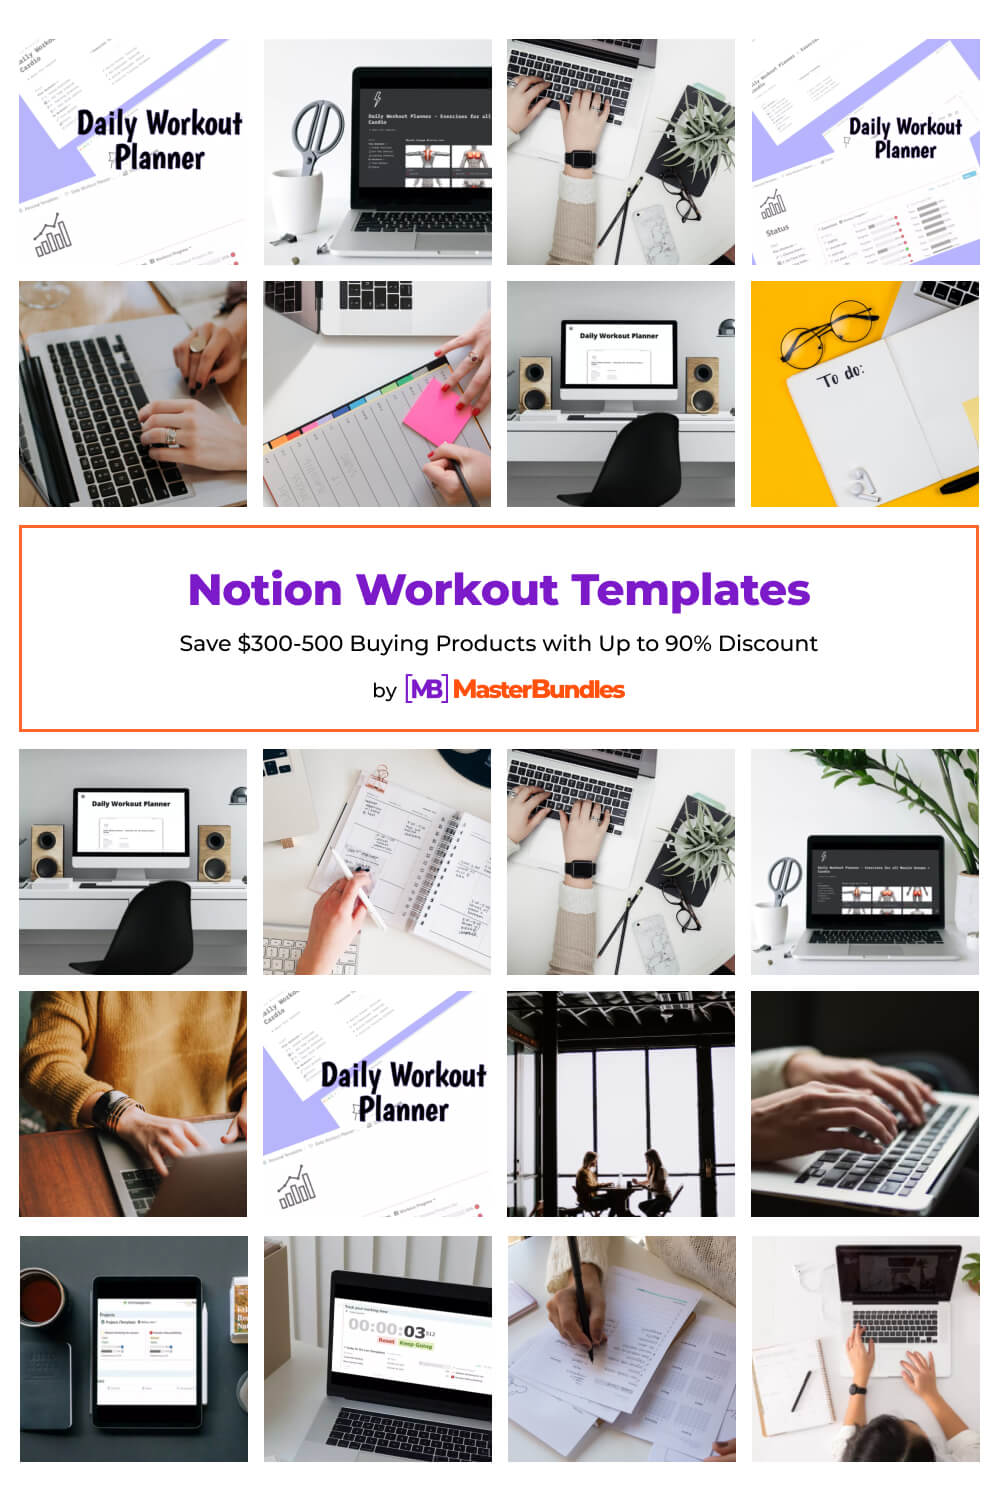 notion workout templates pinterest image.